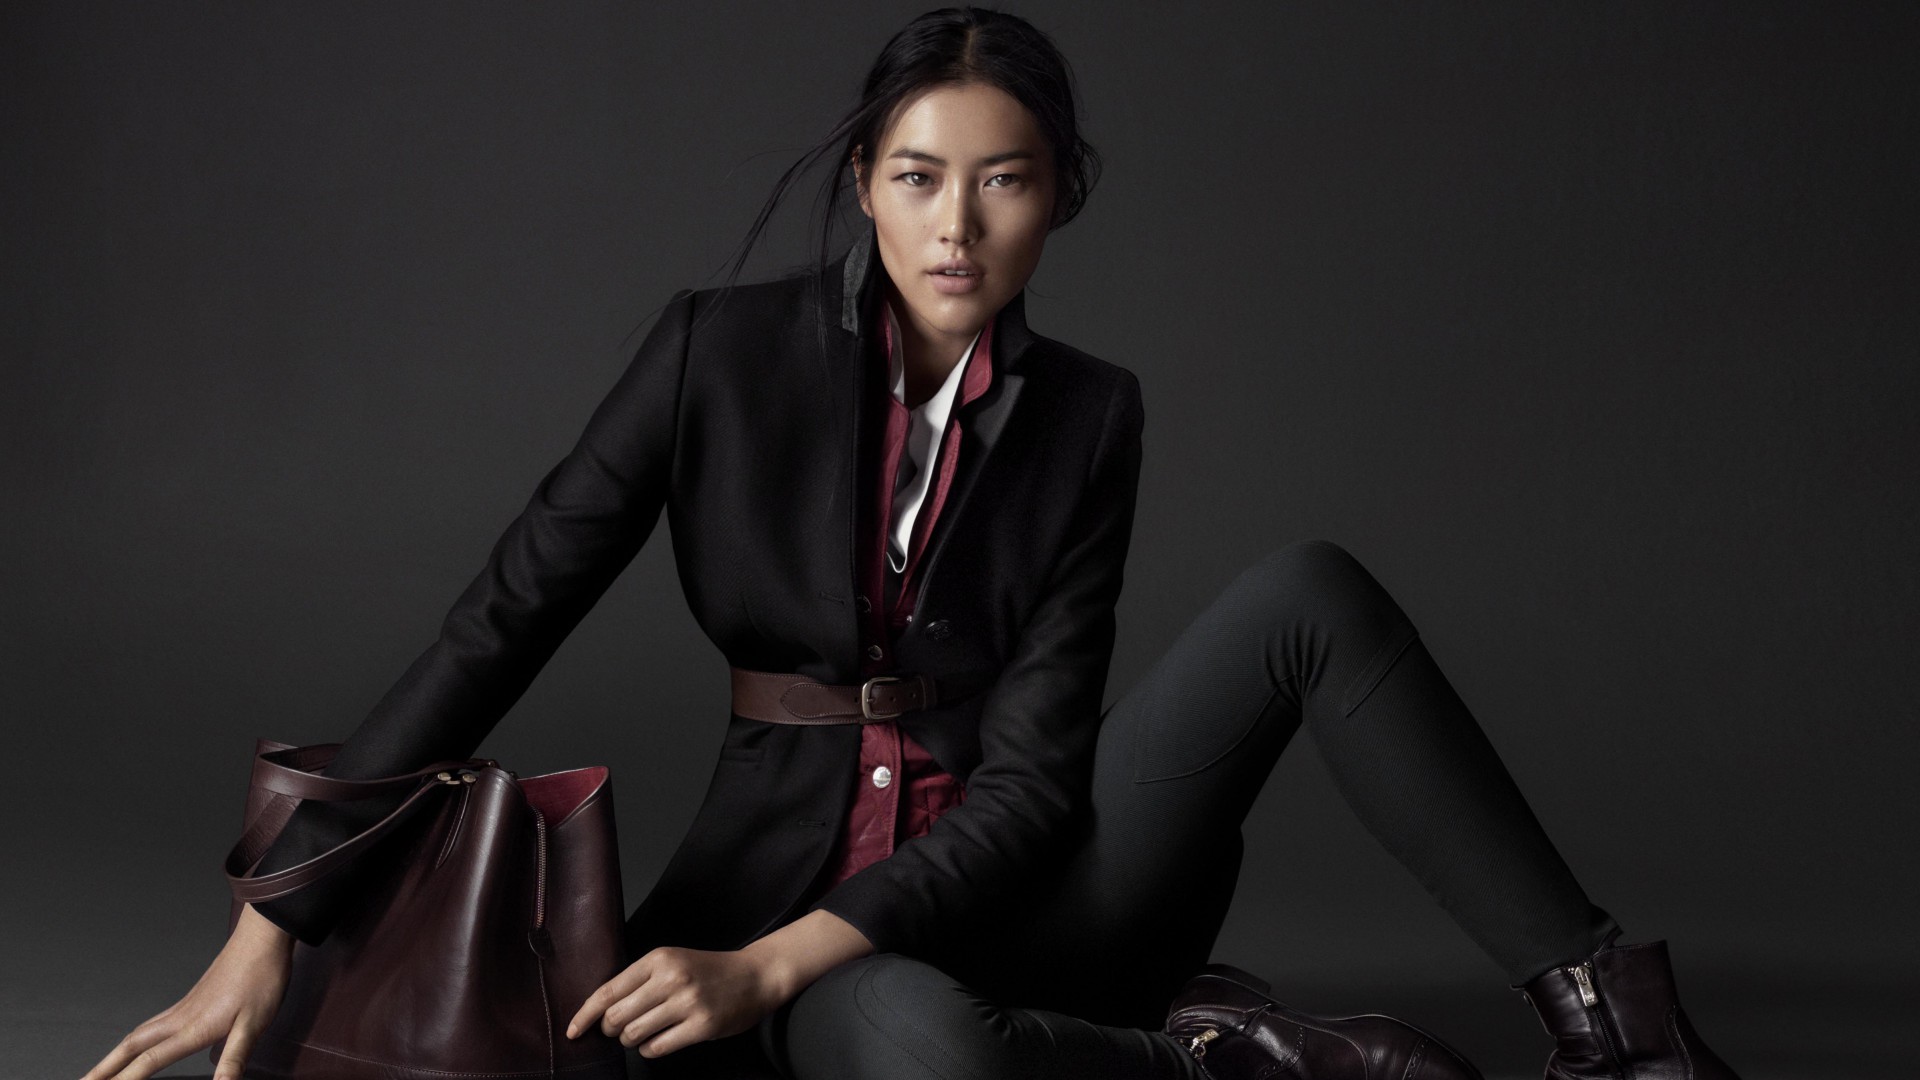 Liu Wen, Top Fashion Models 2015, model, brunette, suit (horizontal)